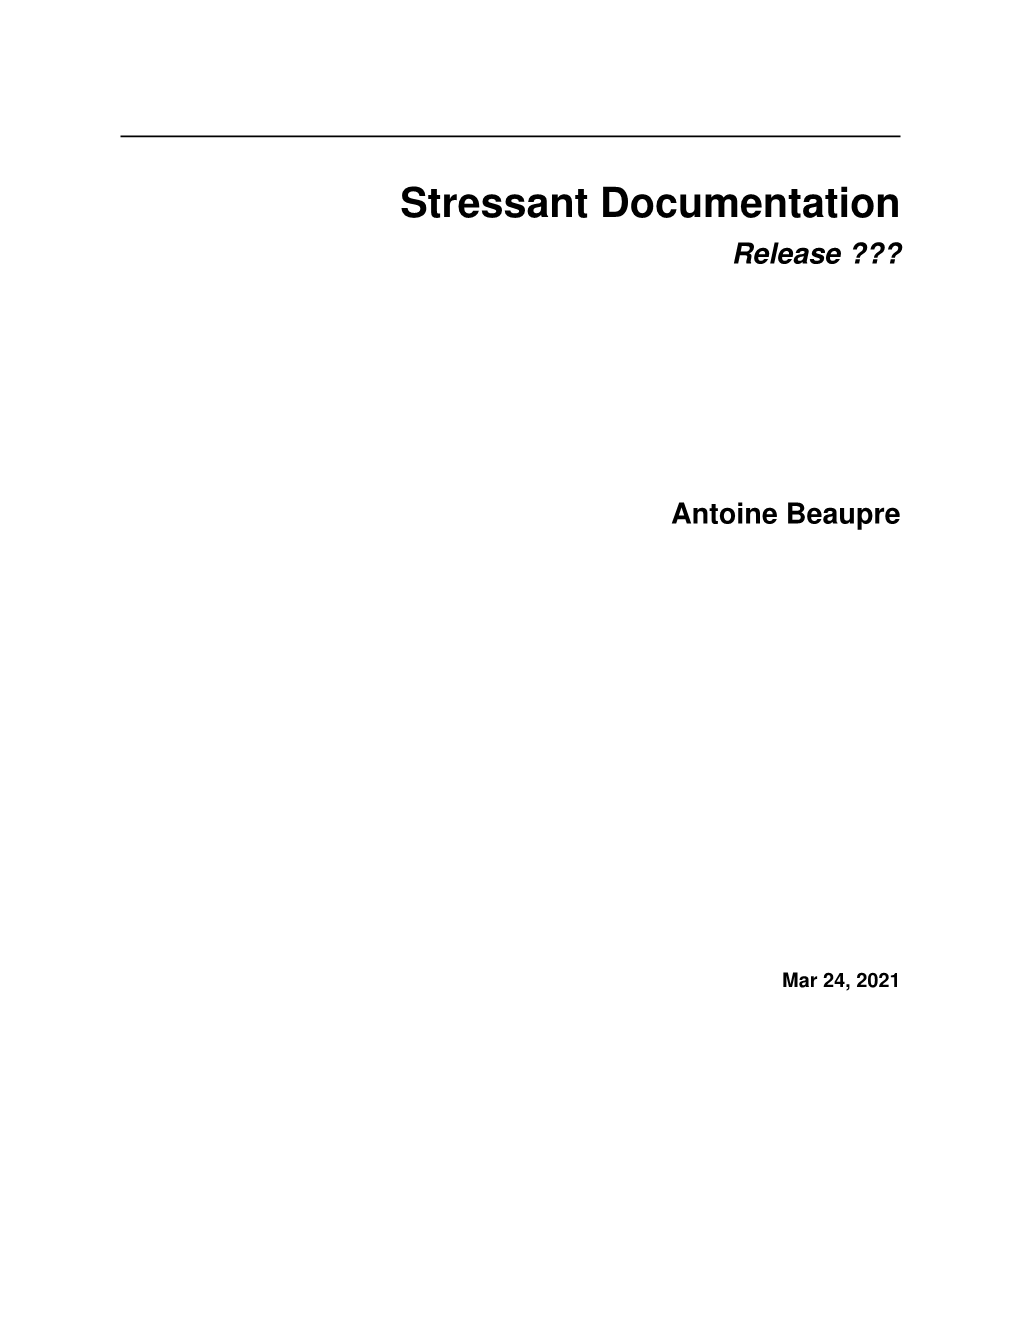 Stressant Documentation Release ???